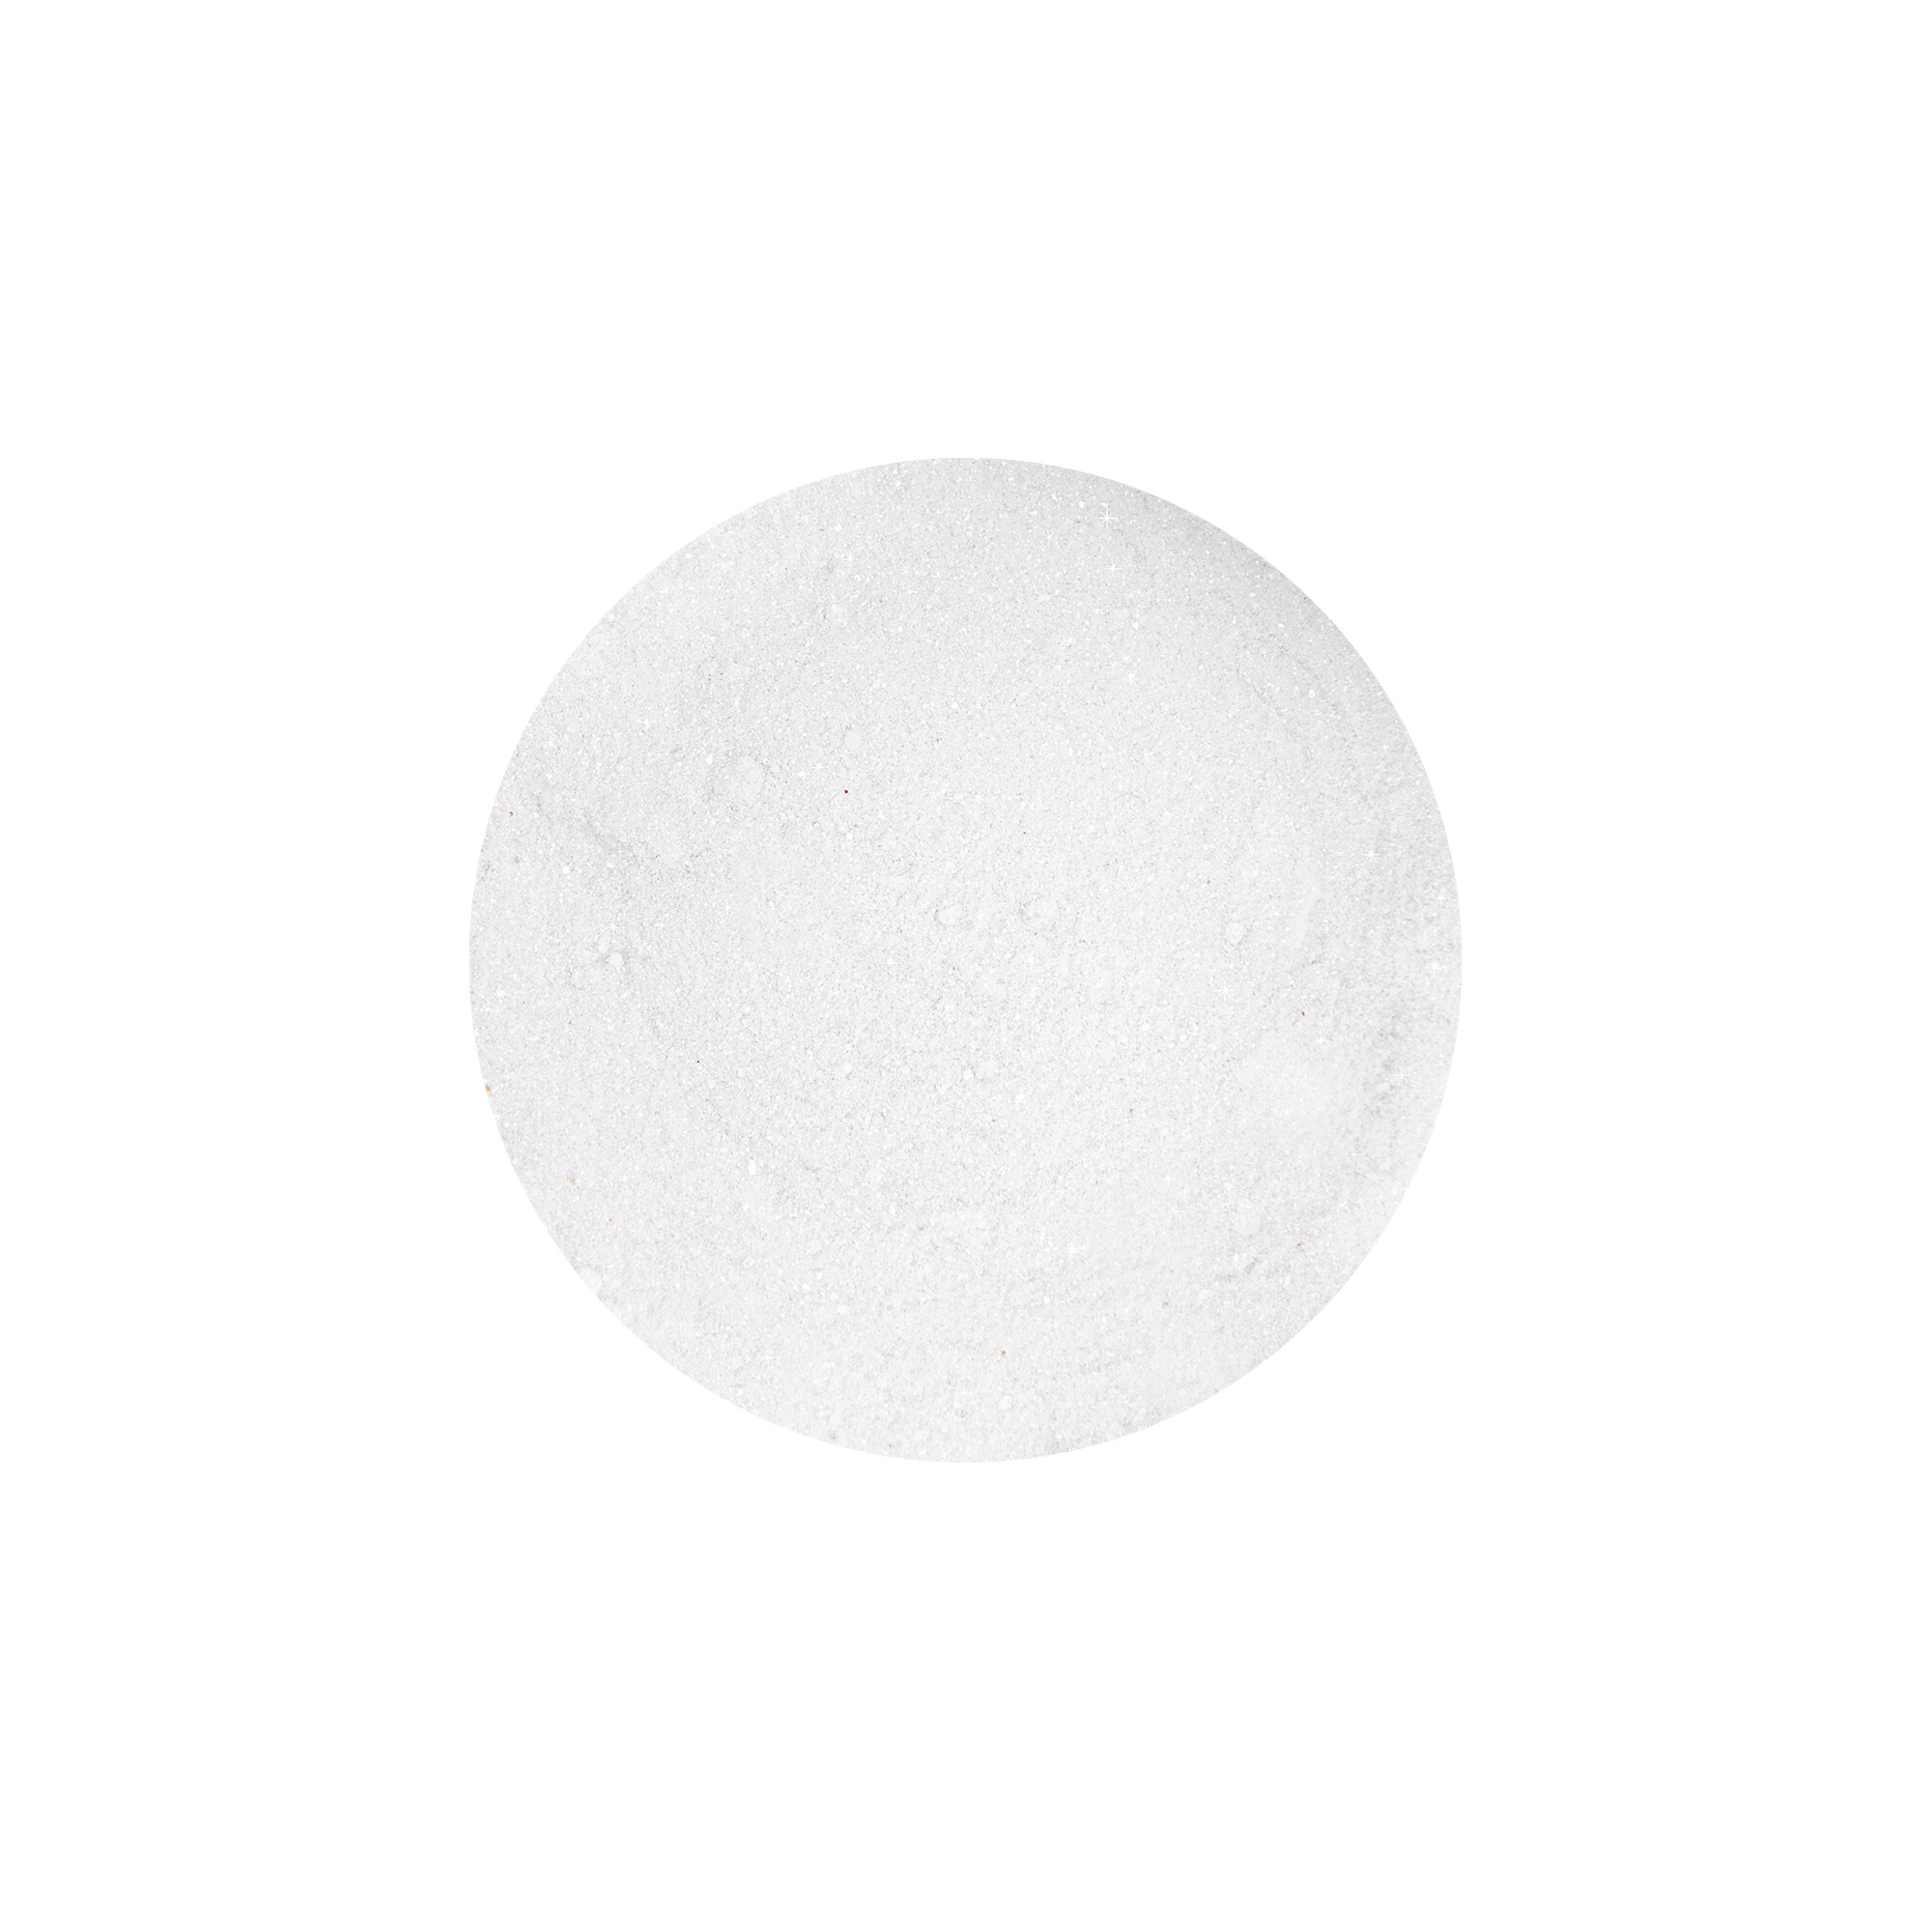 Diamond Dust – Weiß